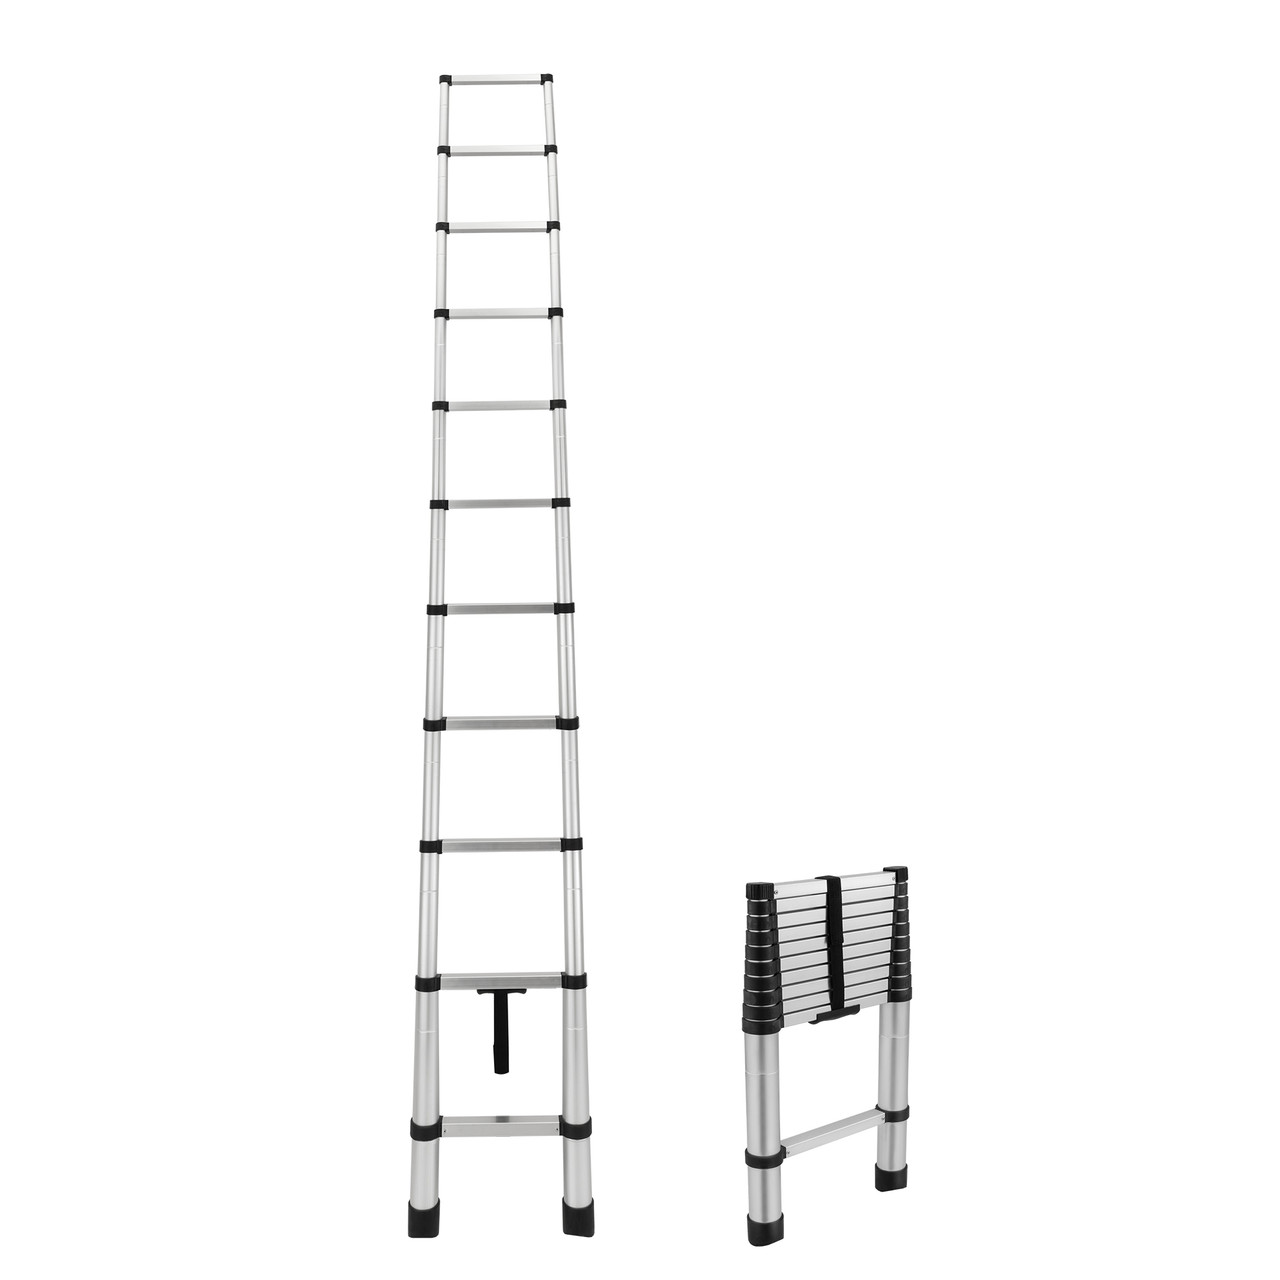 Using a Telescopic Ladder 